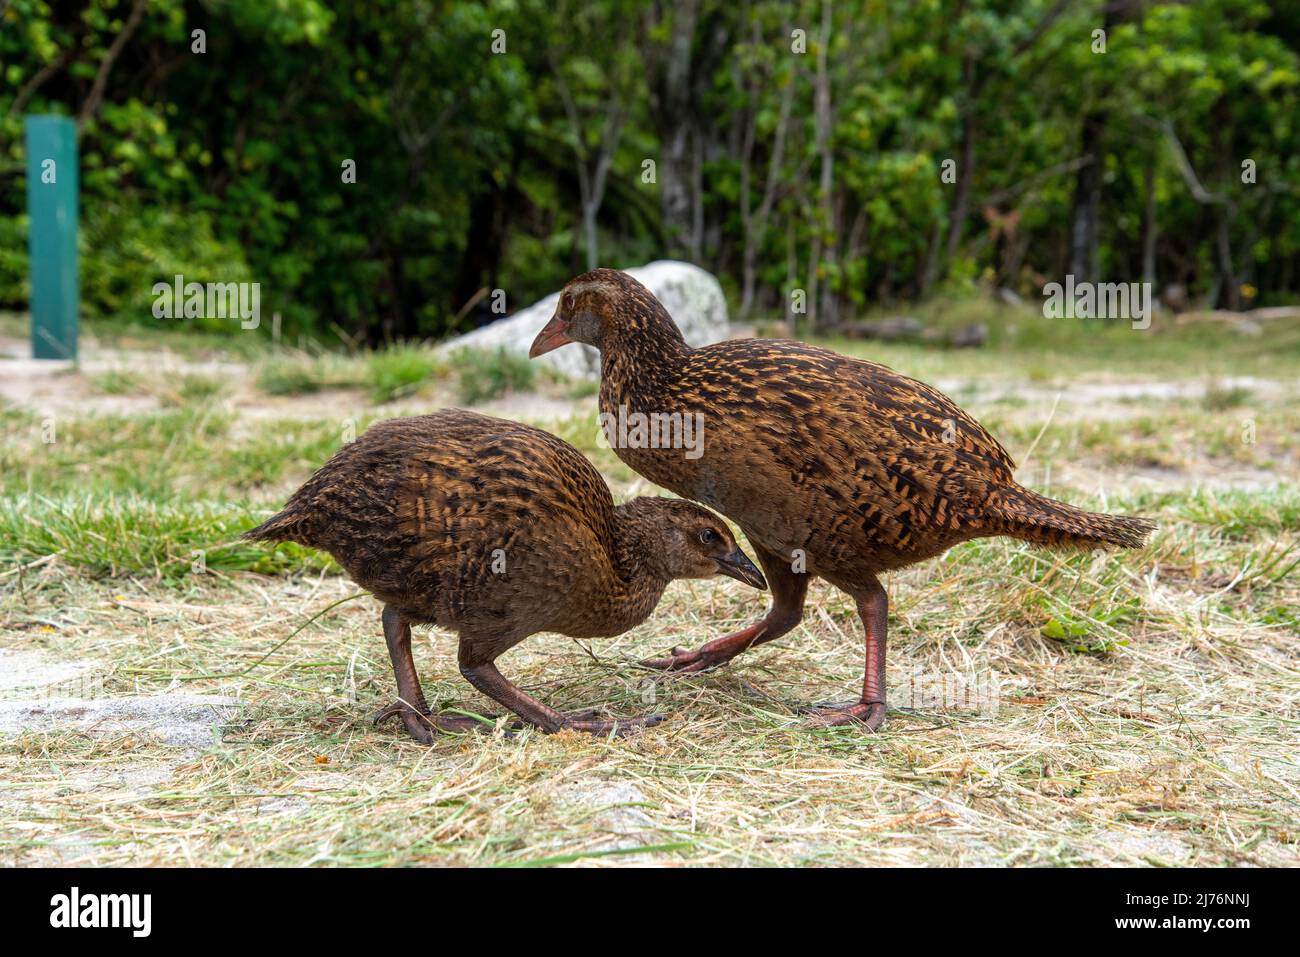 Nosy Weka birds demanding food from hikers at Abel Tasman Coast Track, New Zealand Stock Photo